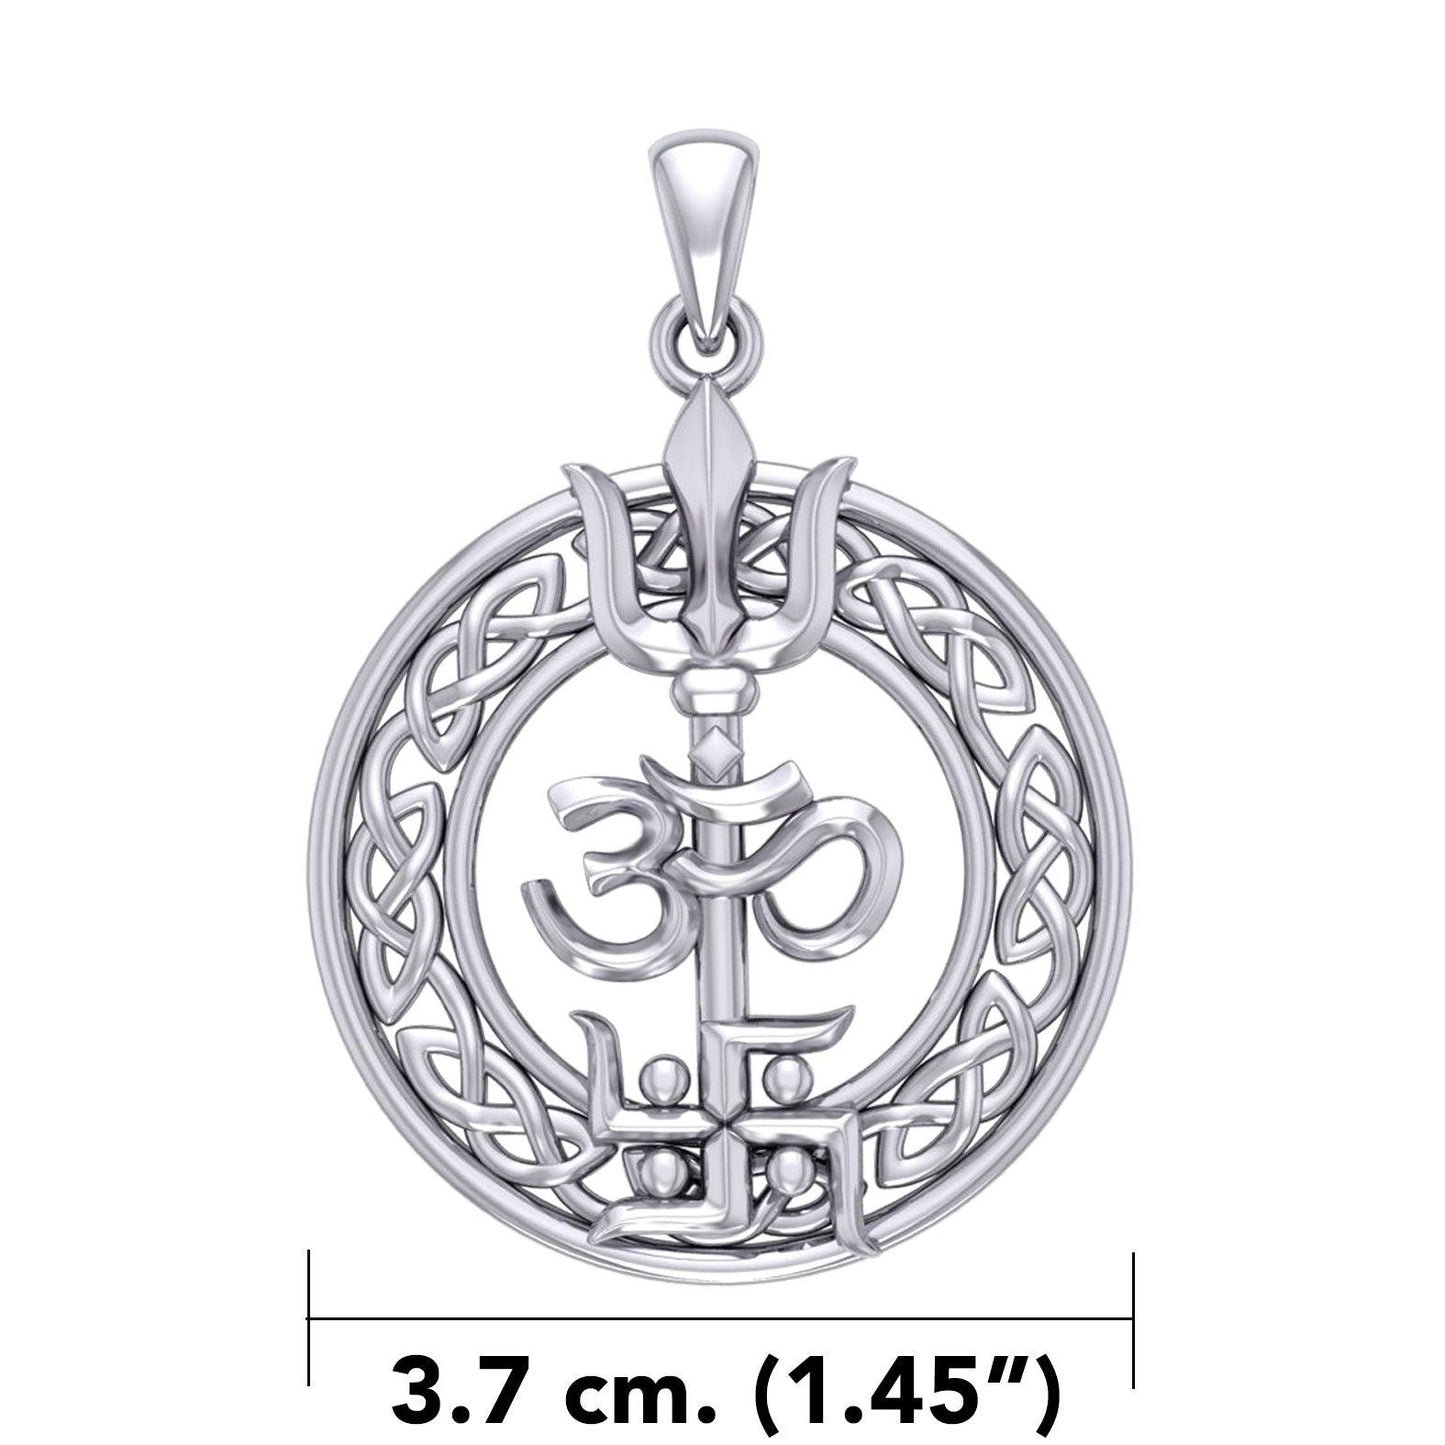 The Trishul Om Swastik Symbols Silver Pendant with Celtic Border TPD7001 - peterstone.dropshipping